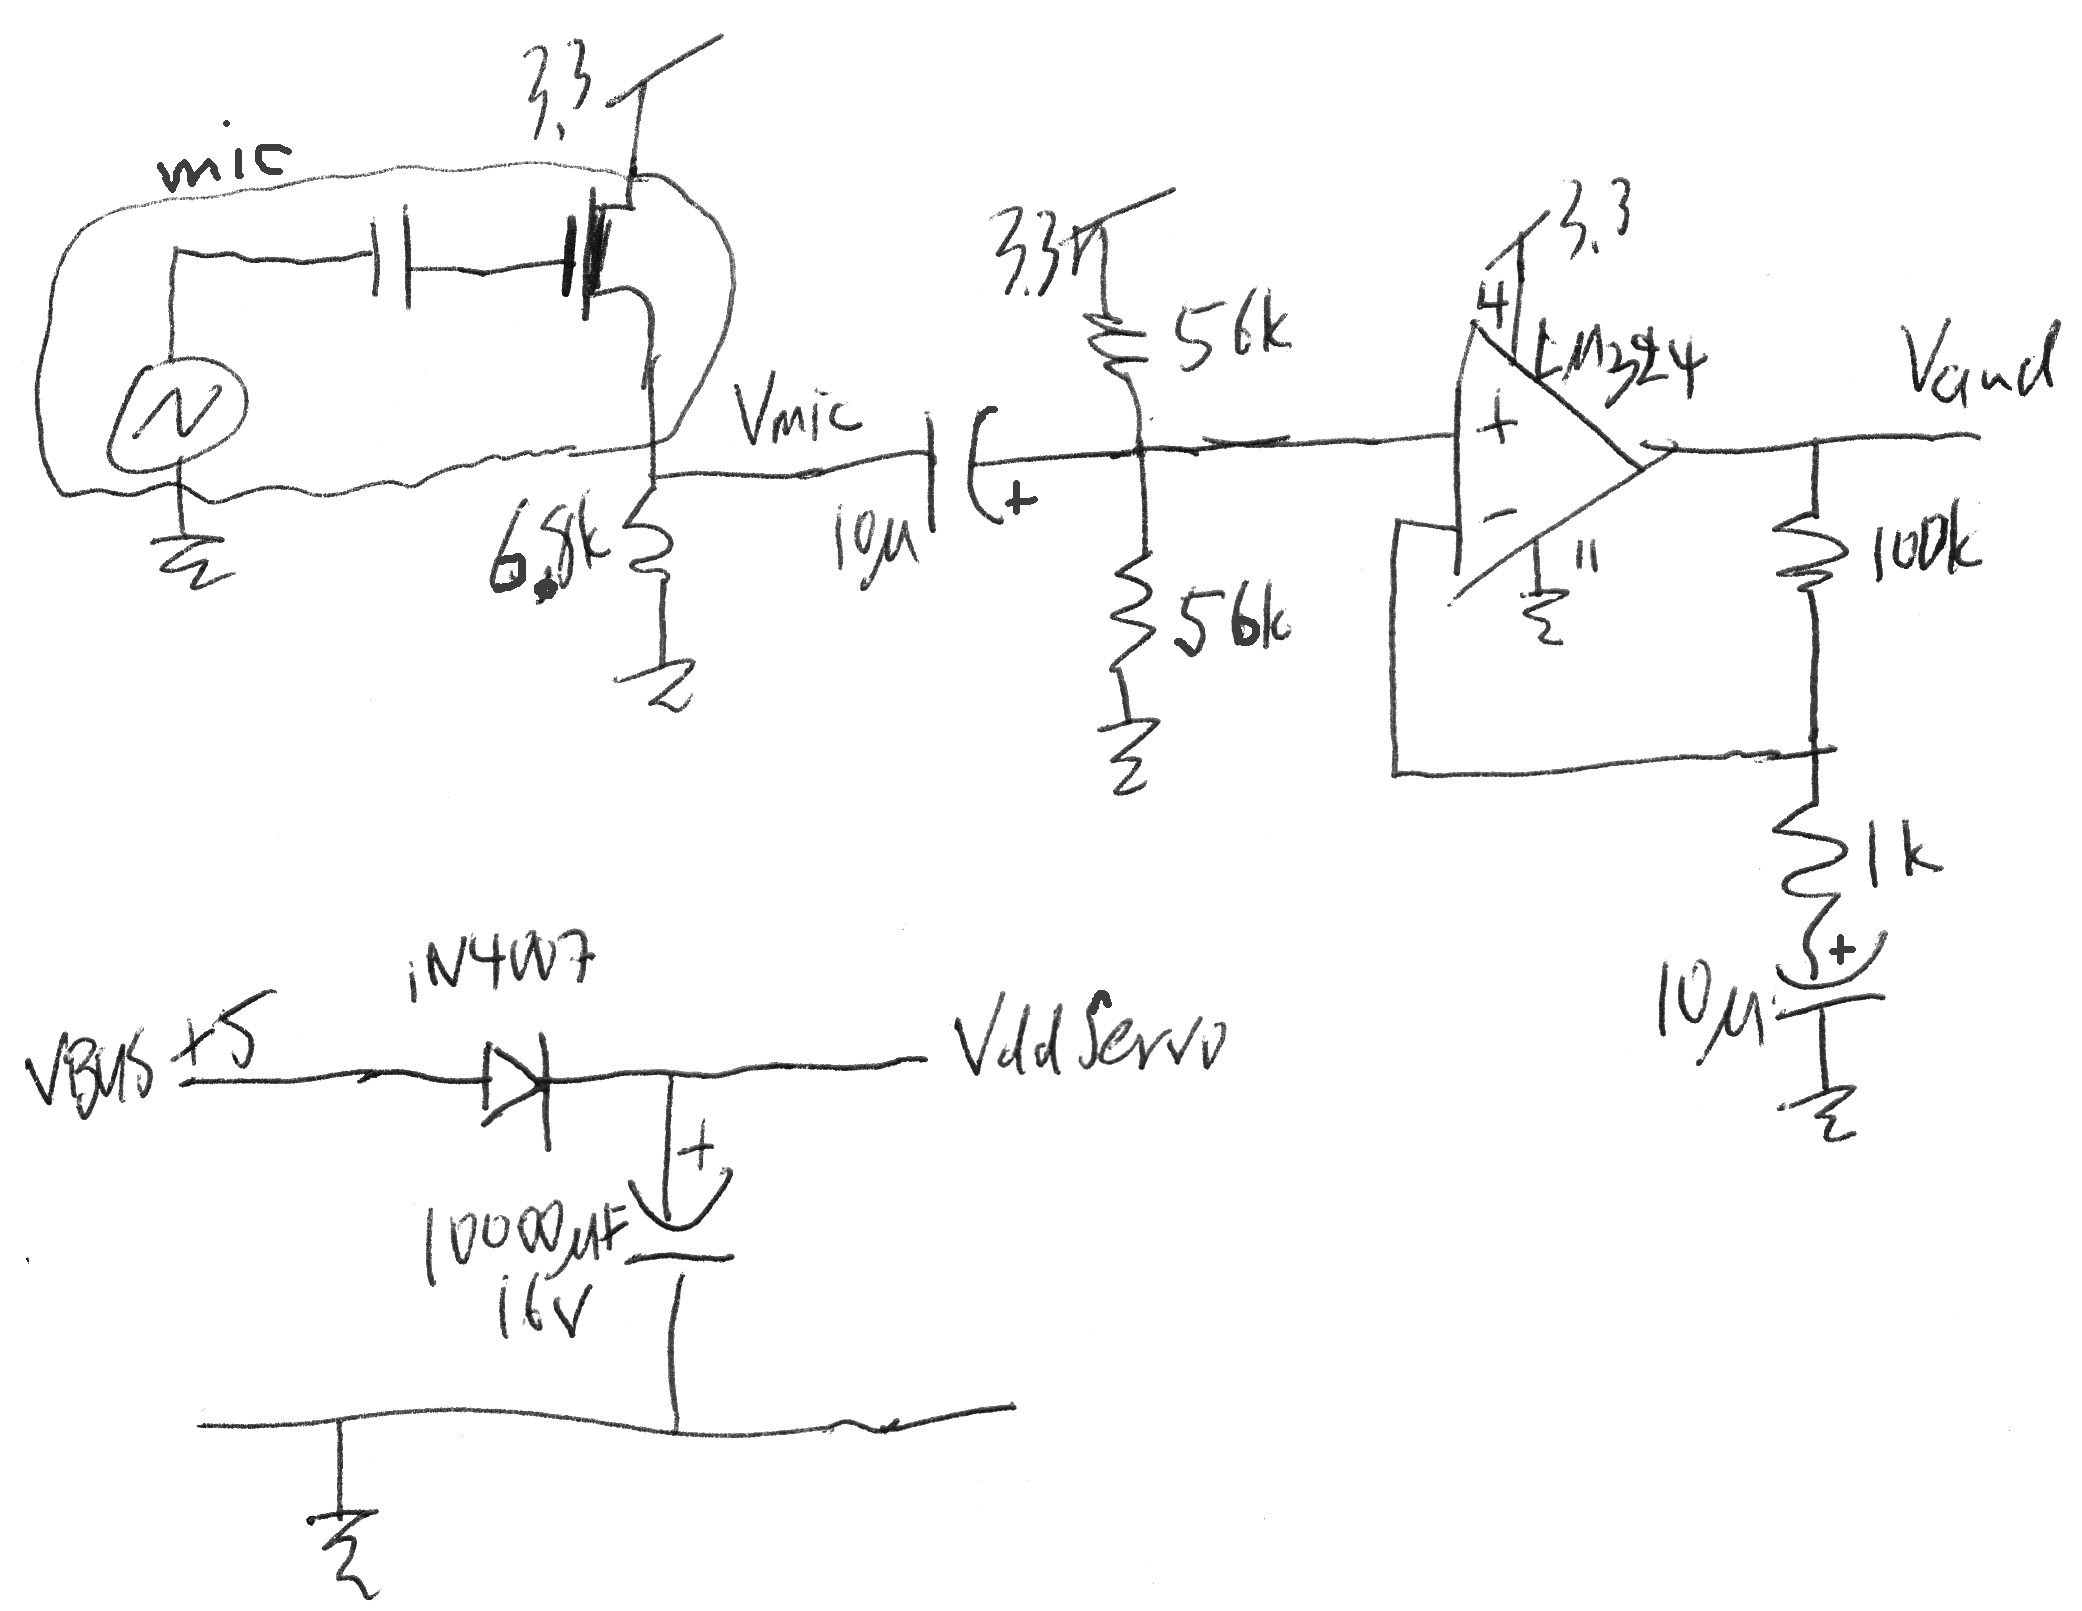 Microphone amplifier schematic